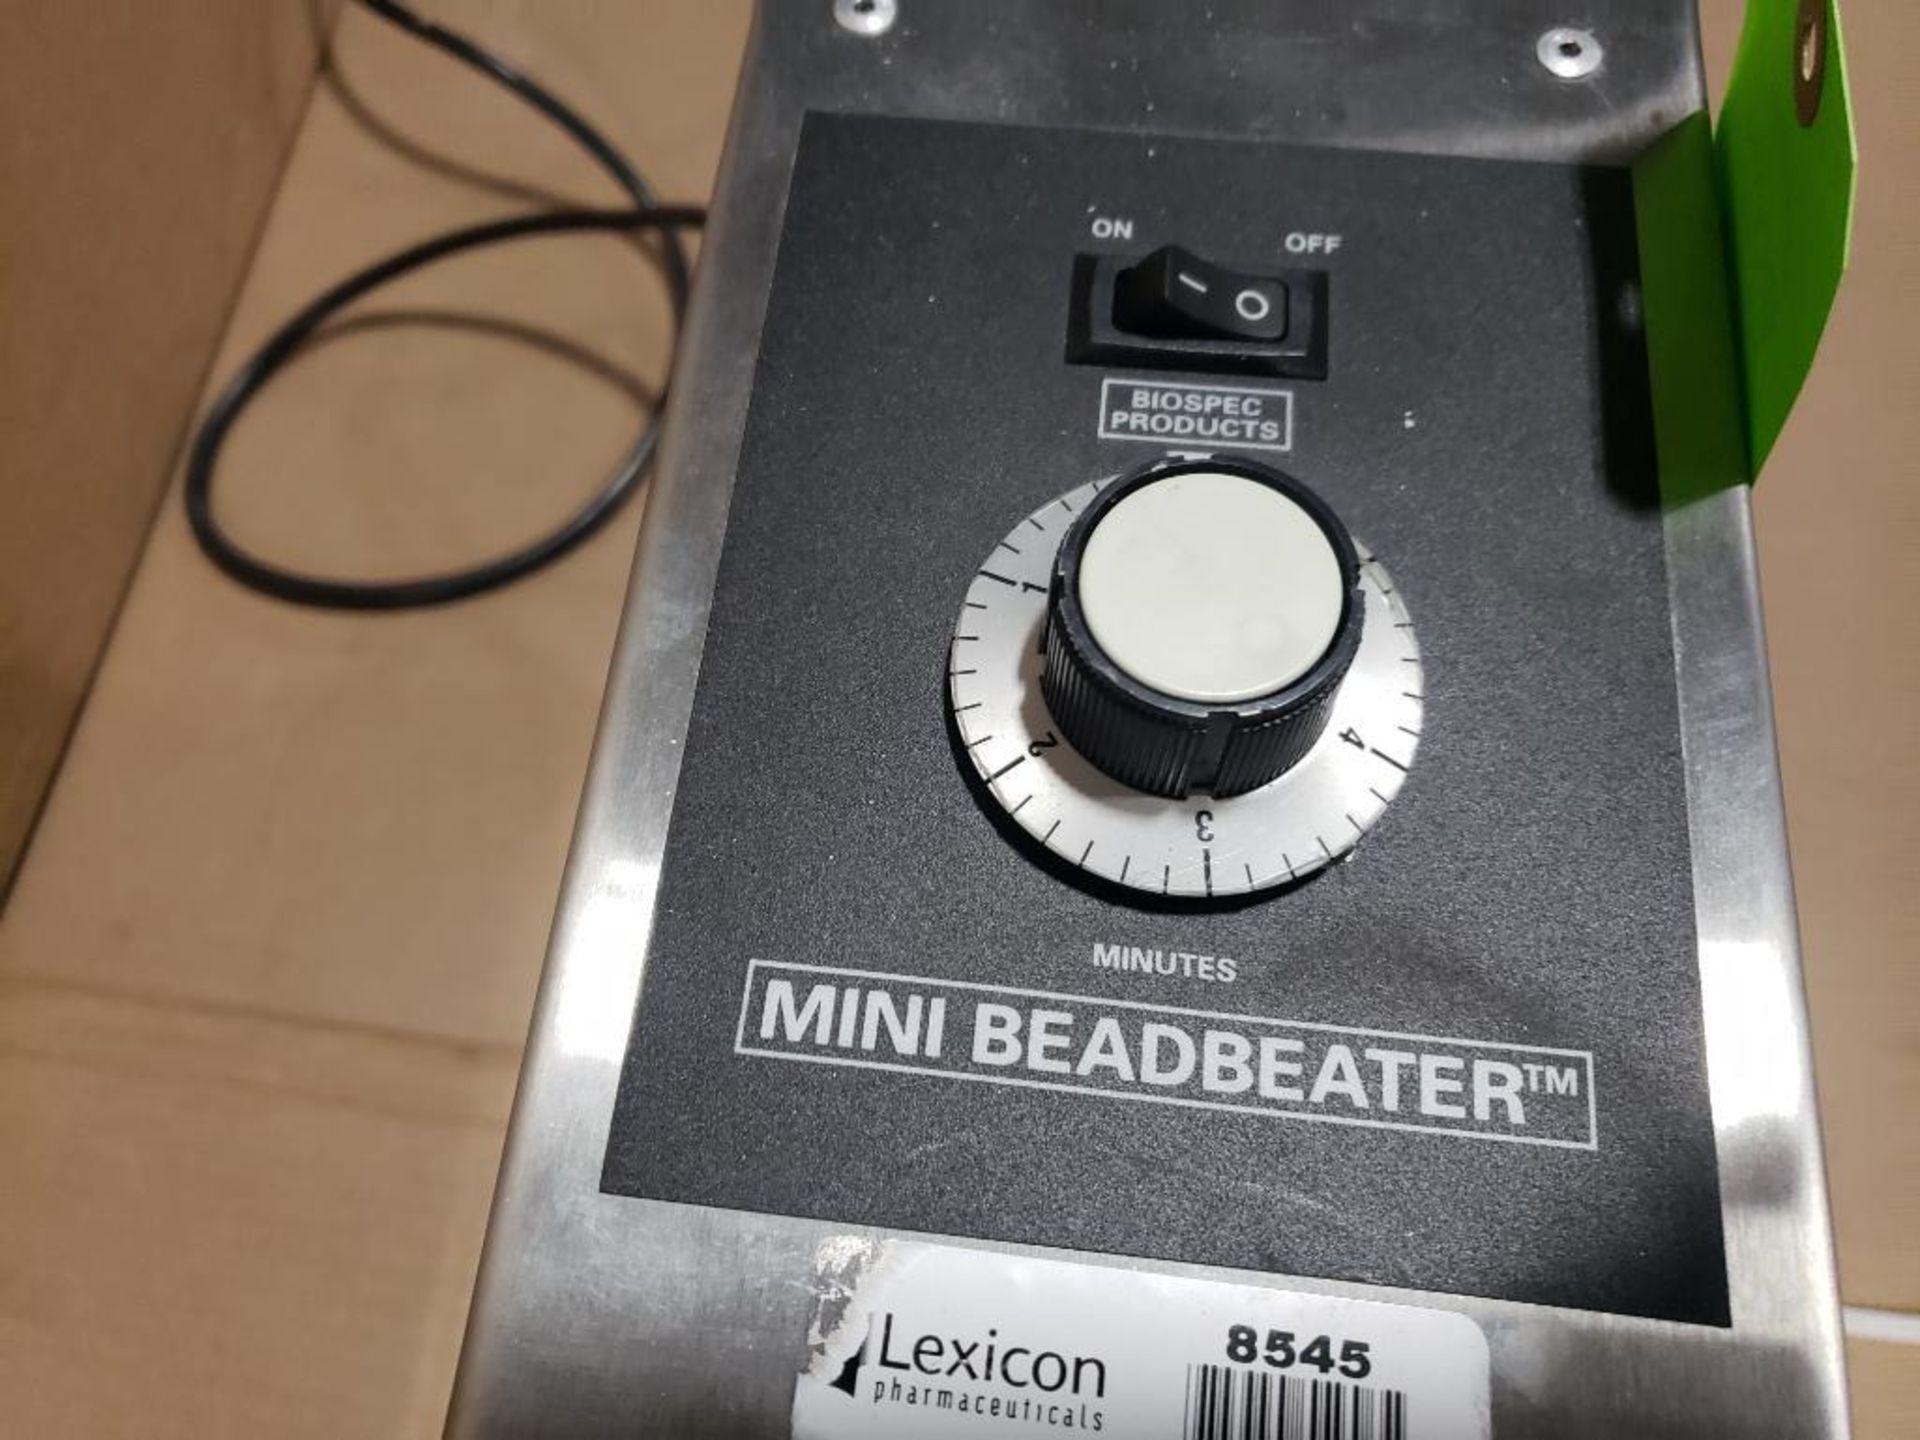 Biospec Products Mini Bead Beater. - Image 2 of 6